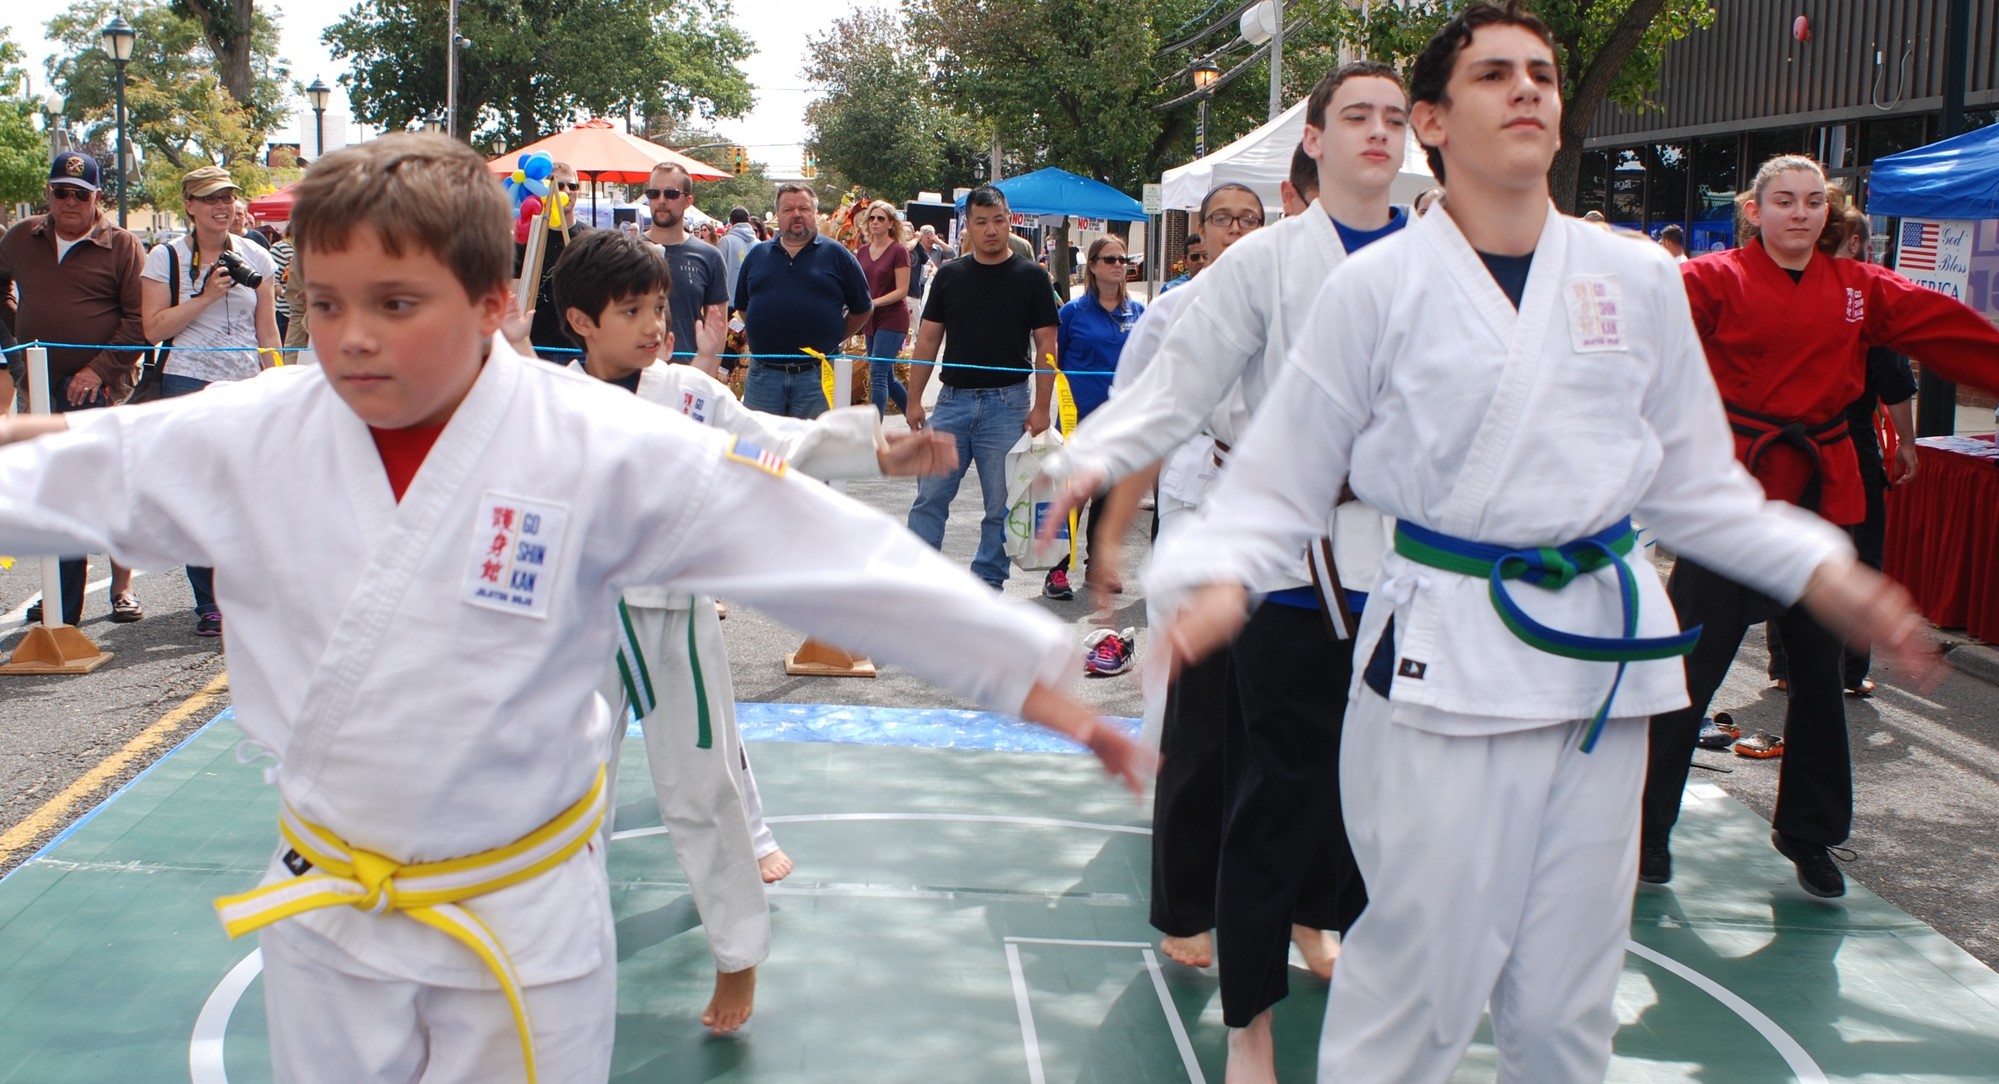 Students at Goshinkan Dojo Family Self-Defense Center in Merrick, who are learning ju-jitsu, demonstrated their skills at the fair.